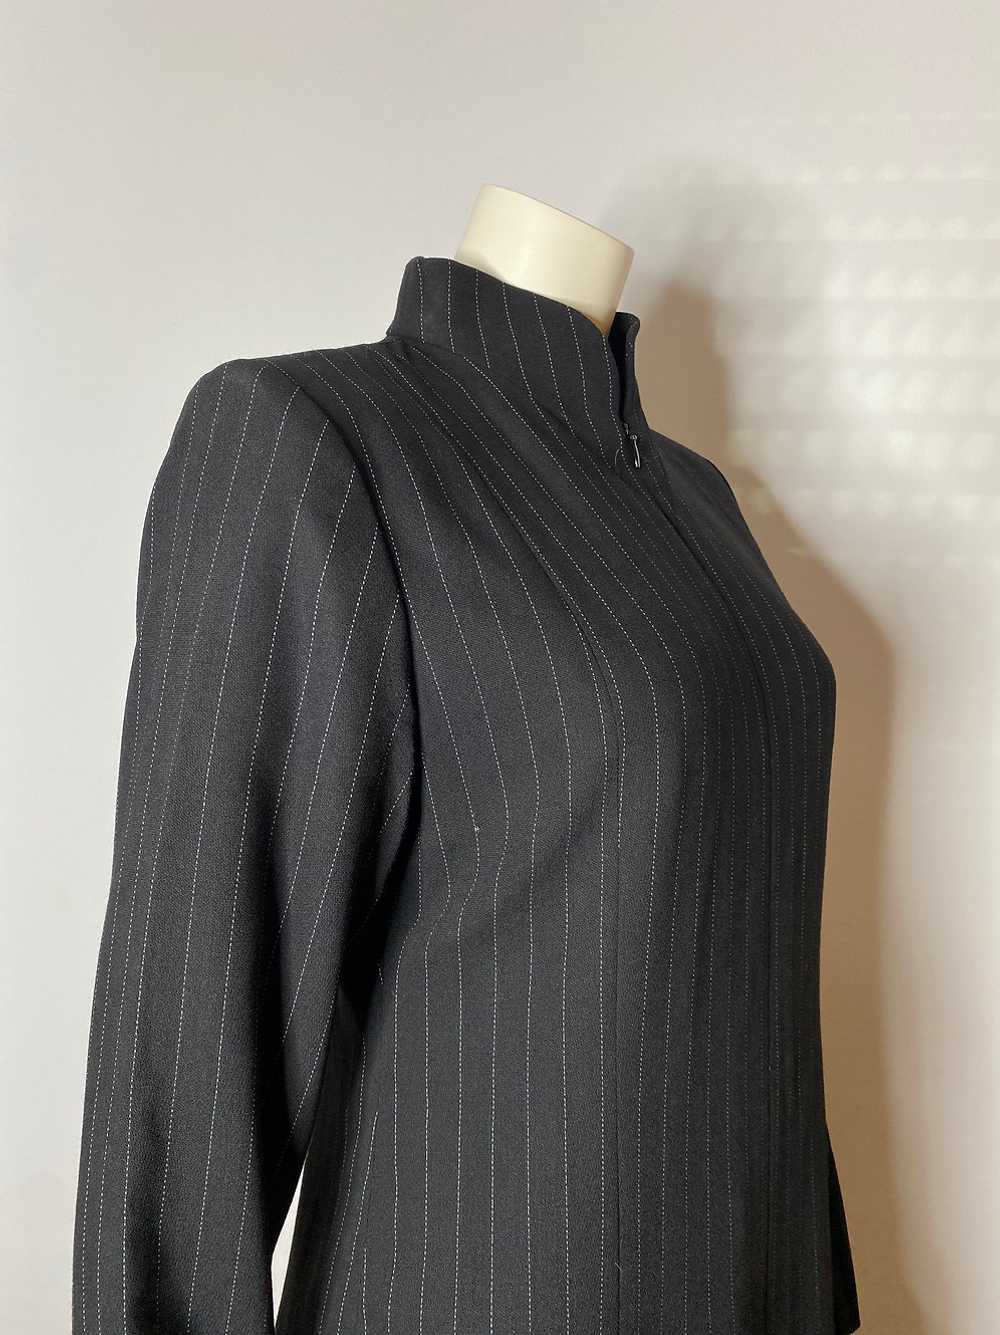 Yves Saint Laurent black striped dress - image 7